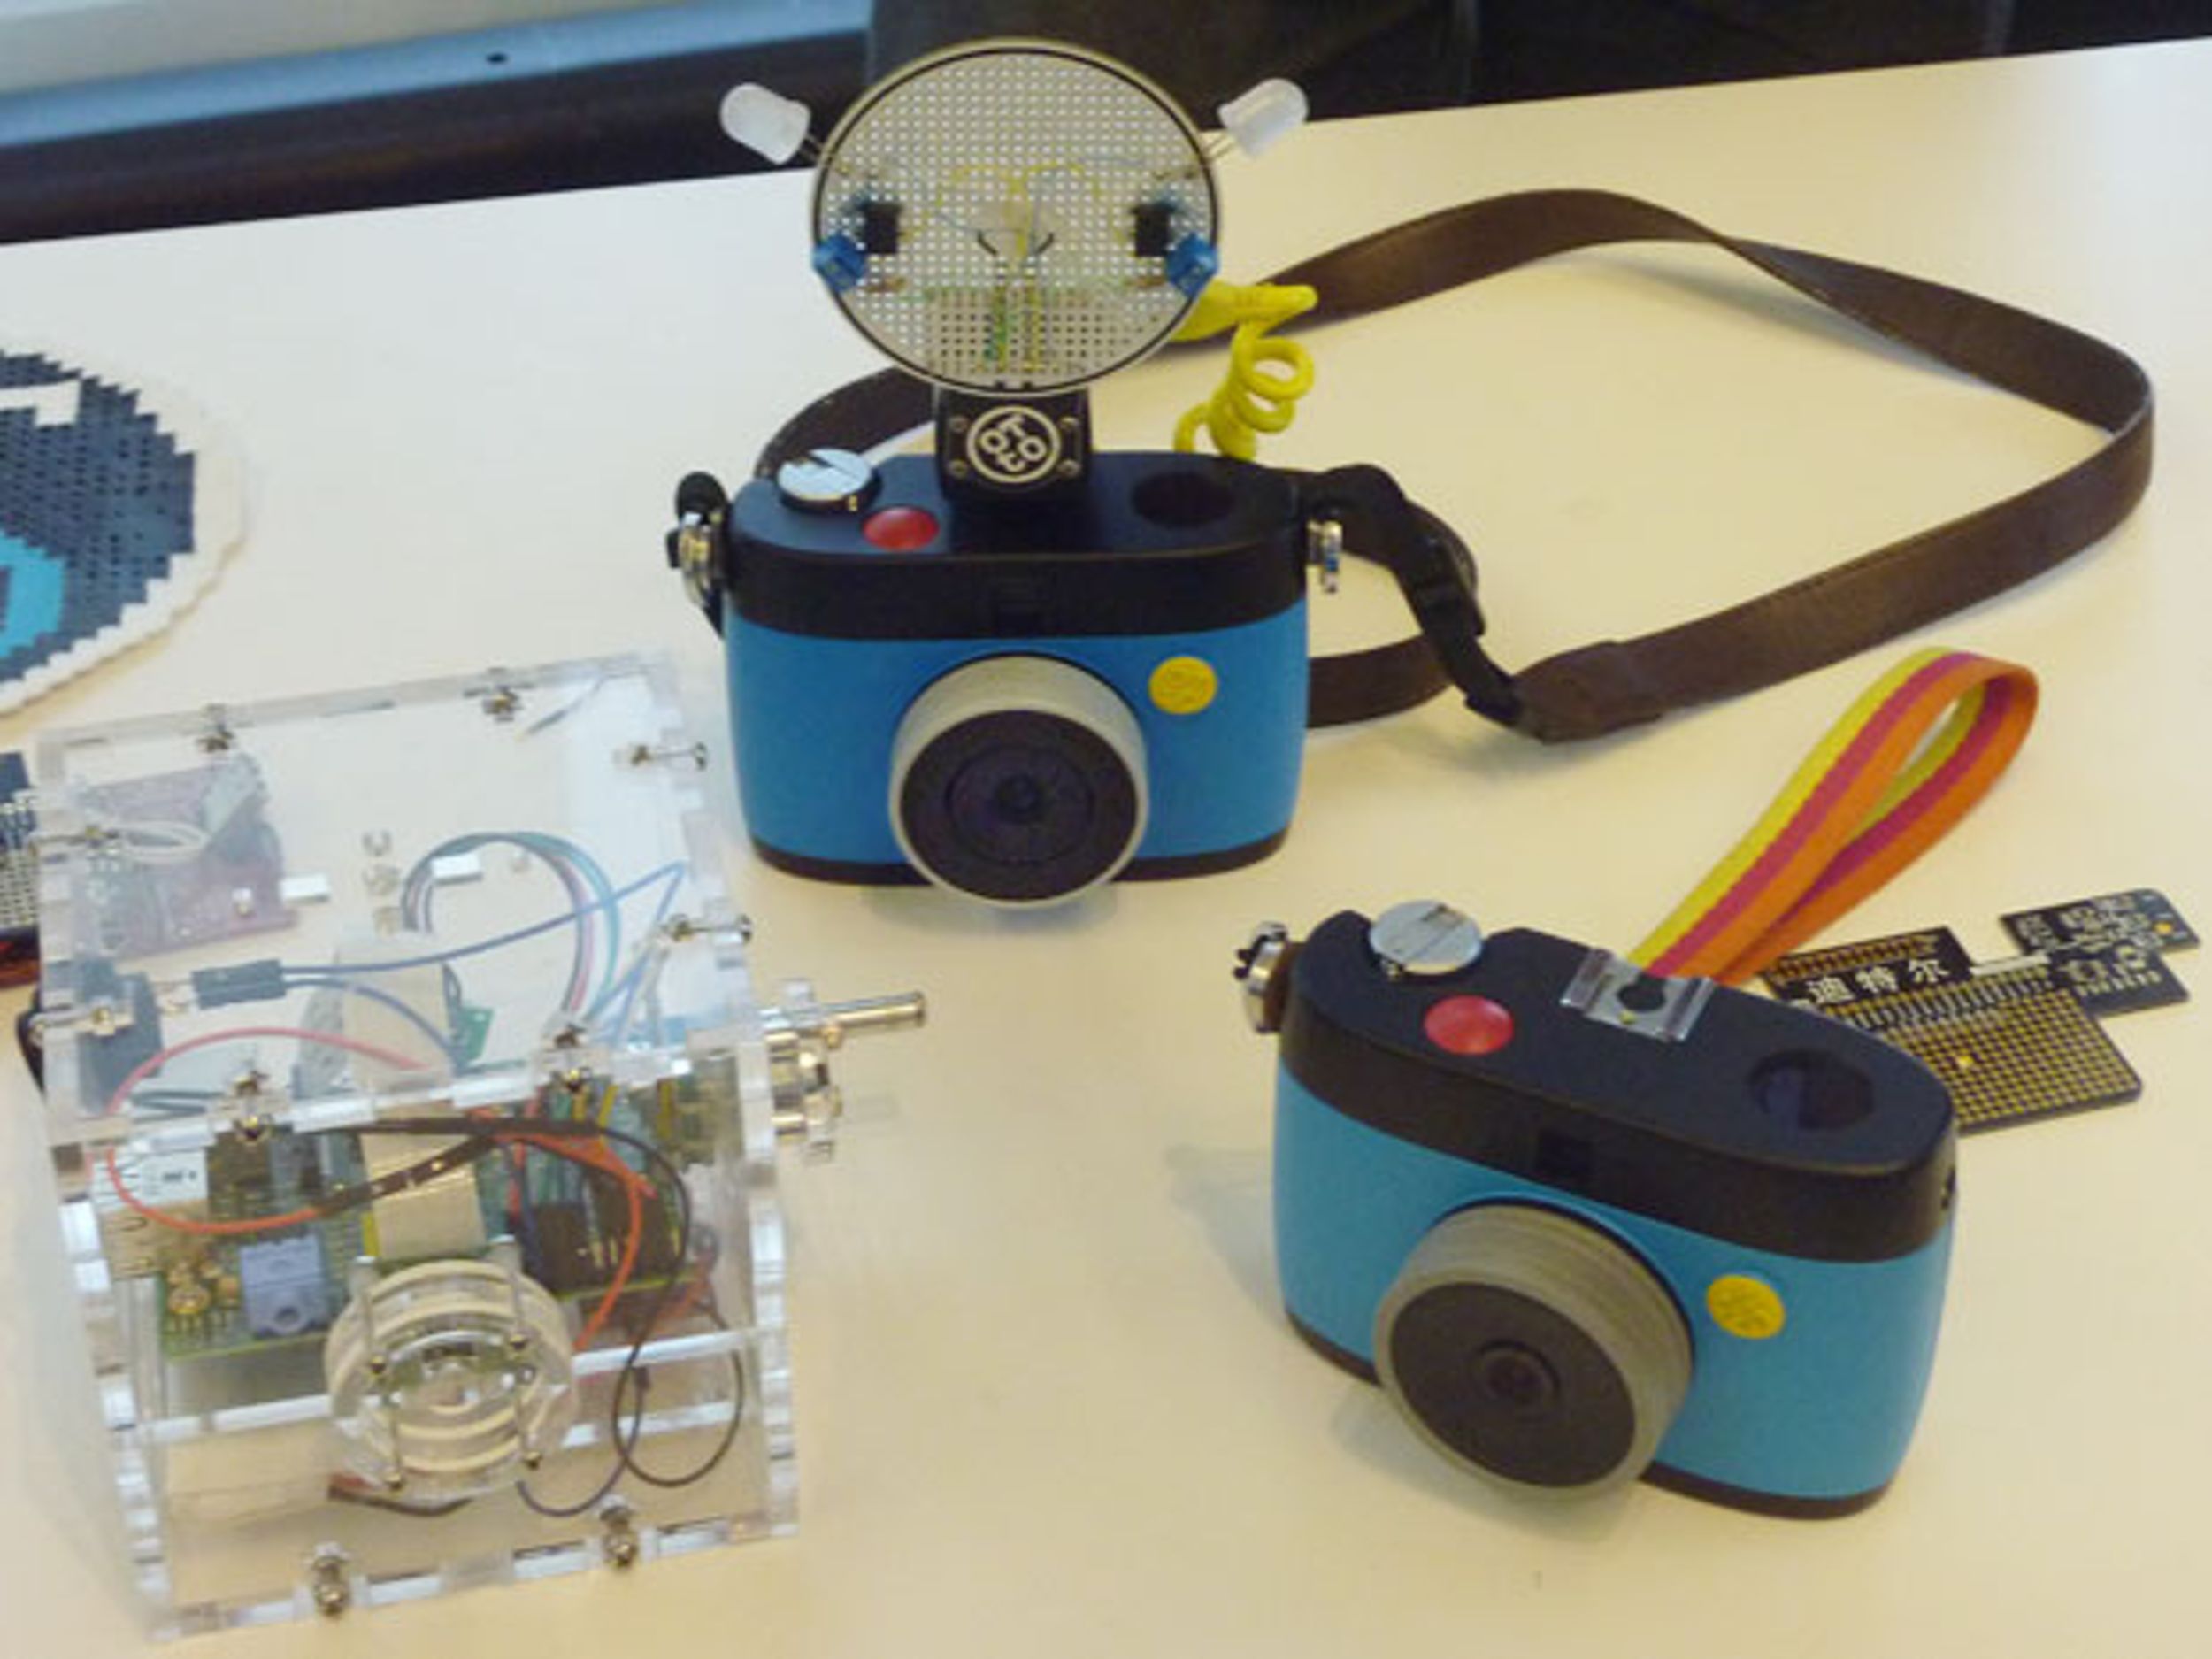 Haxlr8r's New Startups Include Hackable Camera, Smart Hydroponics, and Service Robots